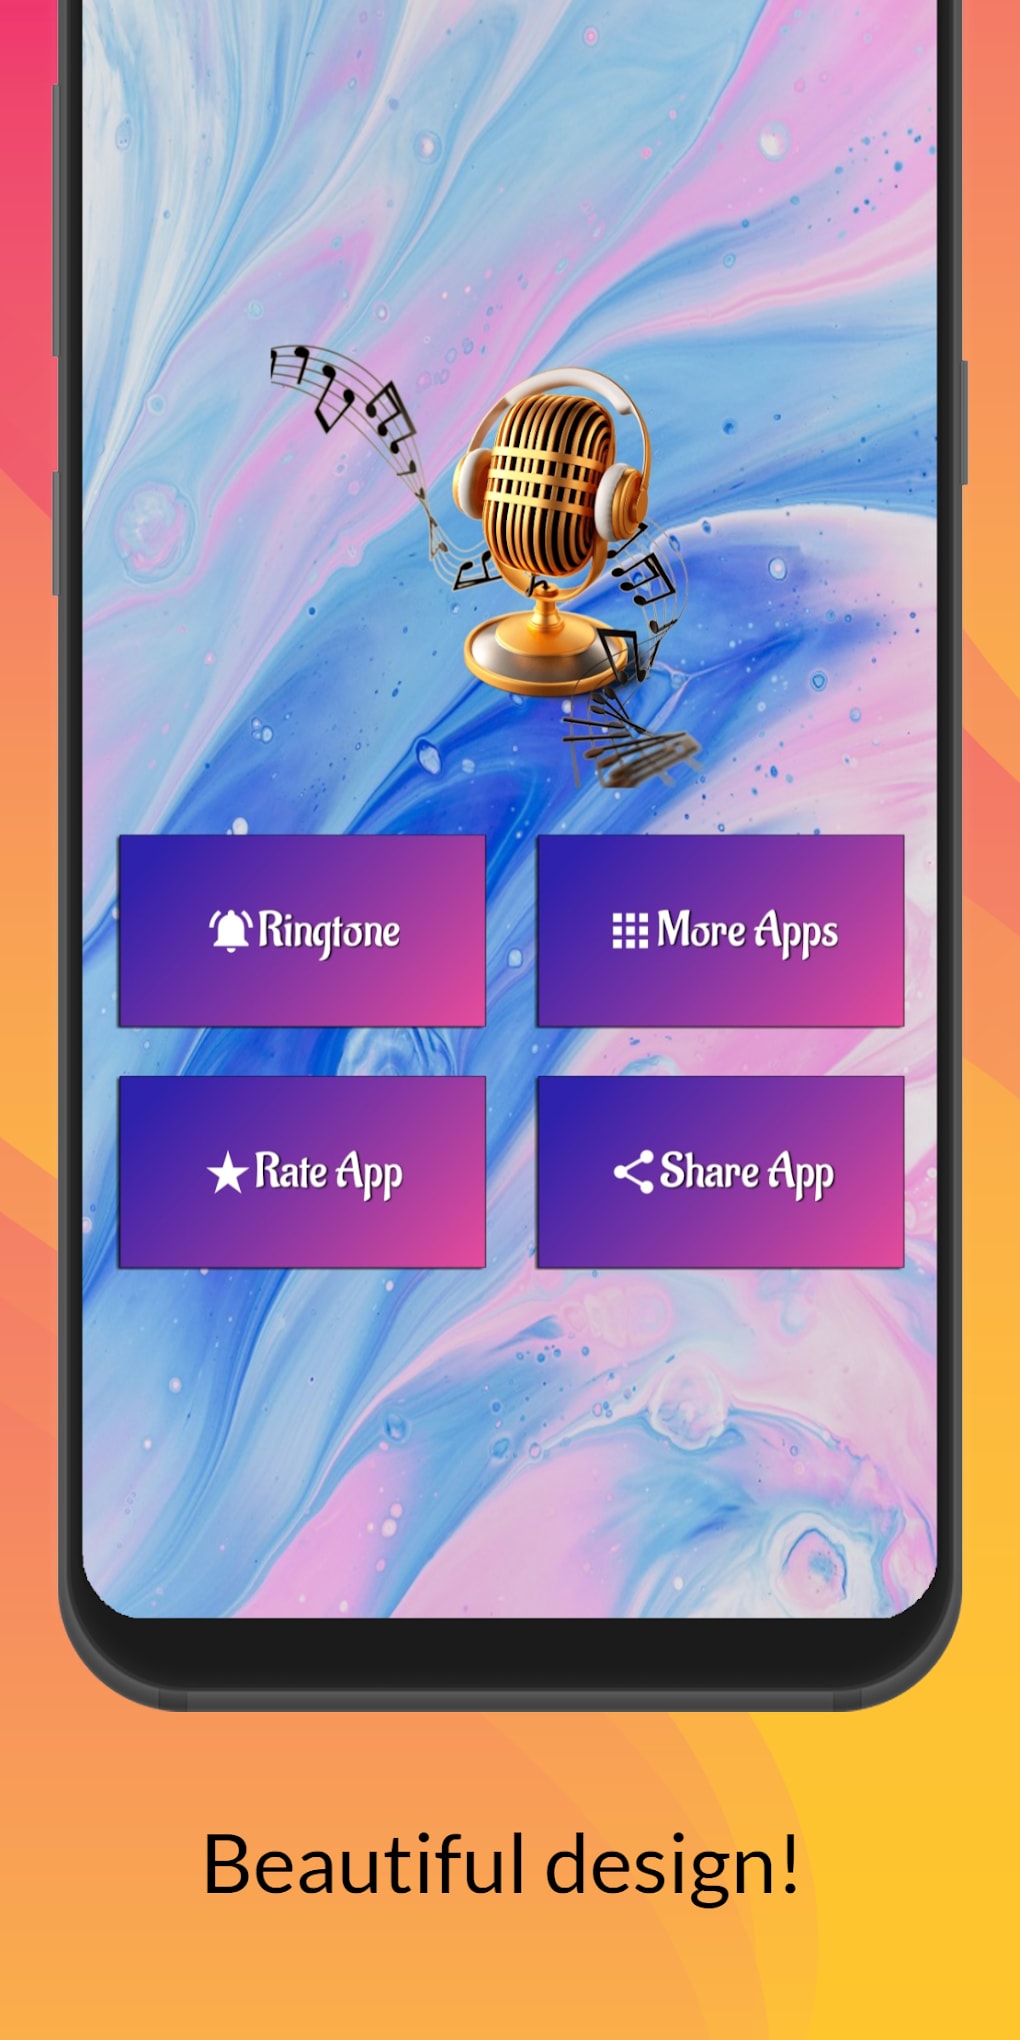 New Telugu Songs - Microsoft Apps